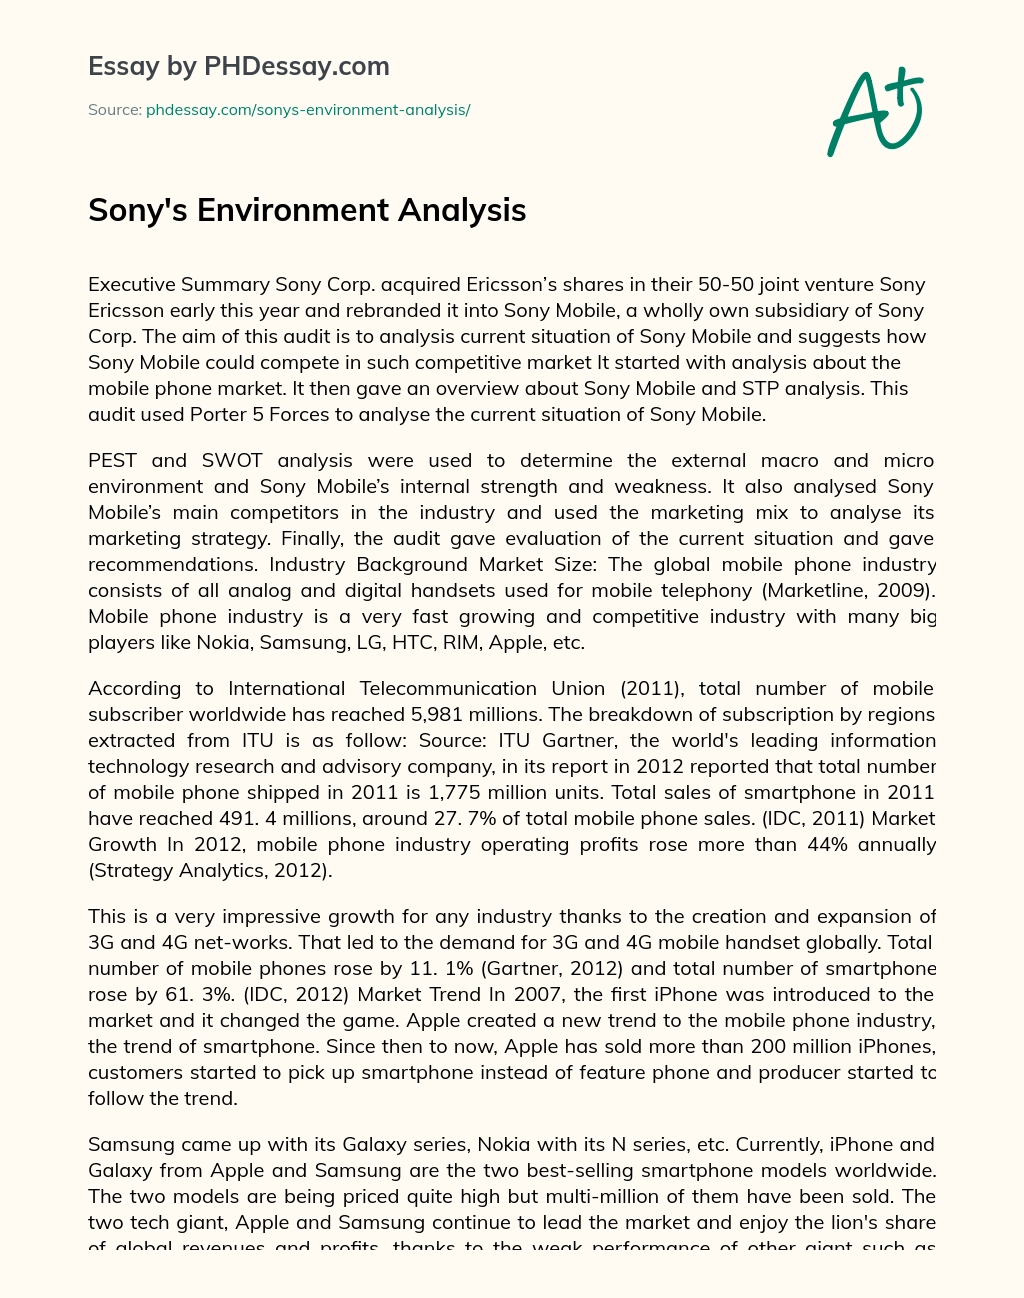 Sony’s Environment Analysis essay